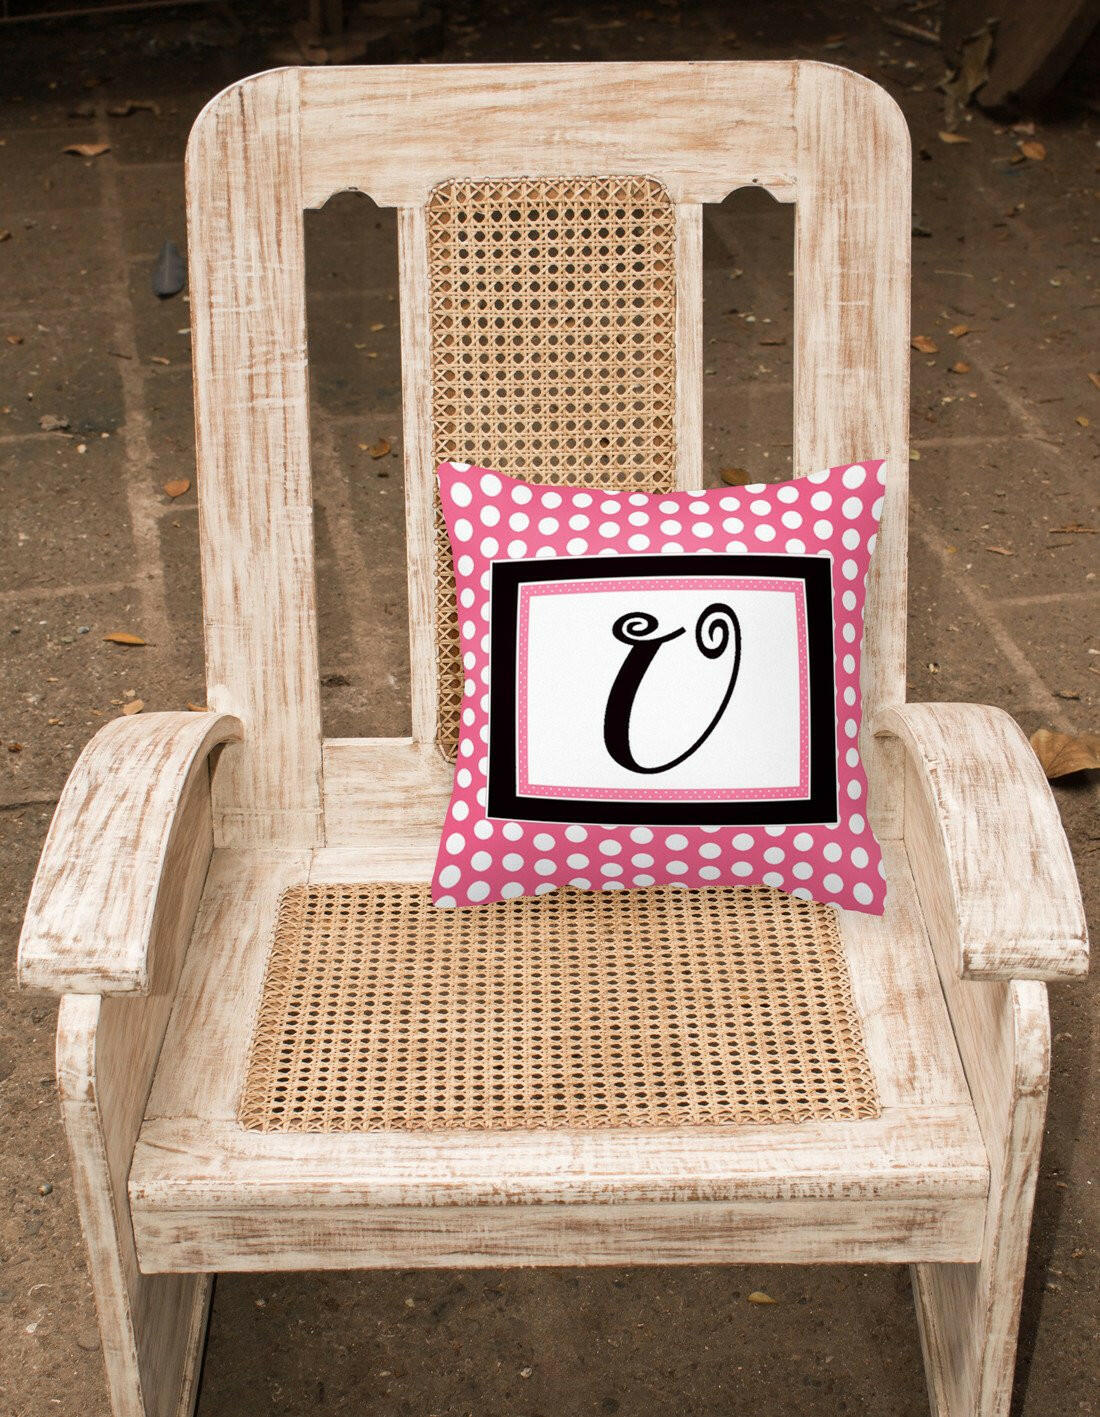 Letter U Initial Monogram Pink Black Polka Dots Decorative Canvas Fabric Pillow - the-store.com